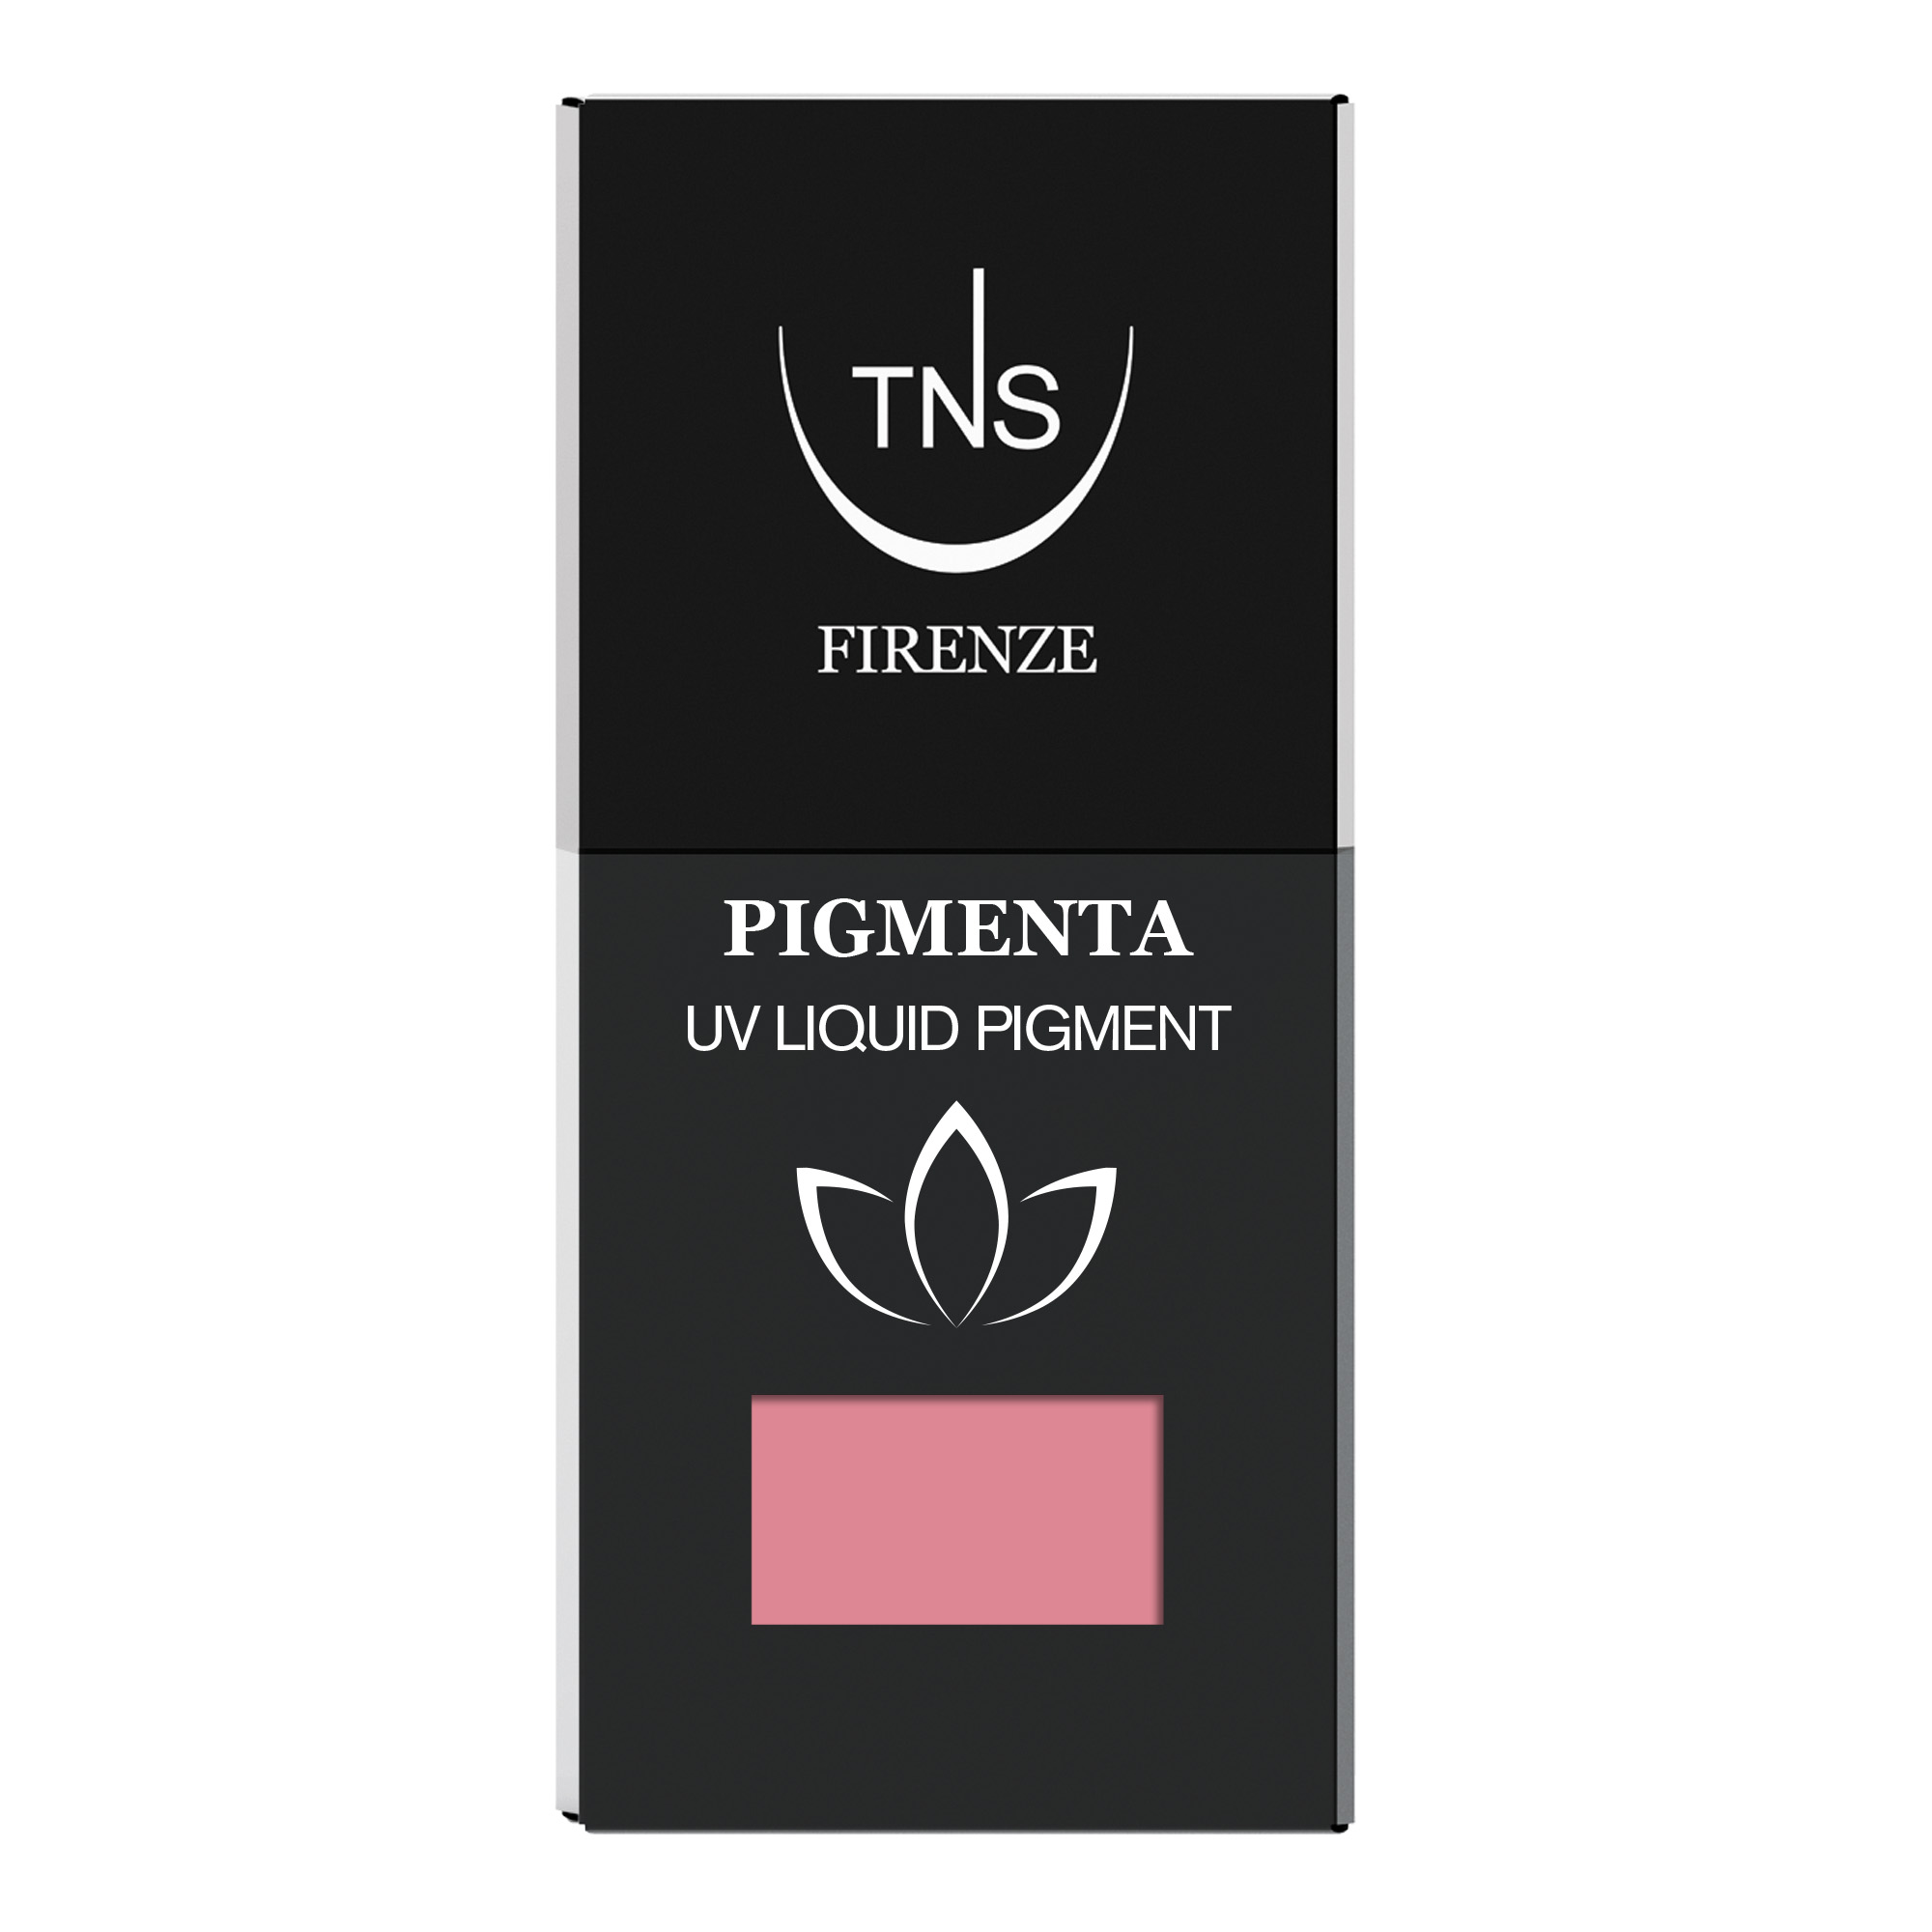 UV Flüssigpigment Skinlover nude rosa 10 ml Pigmenta TNS